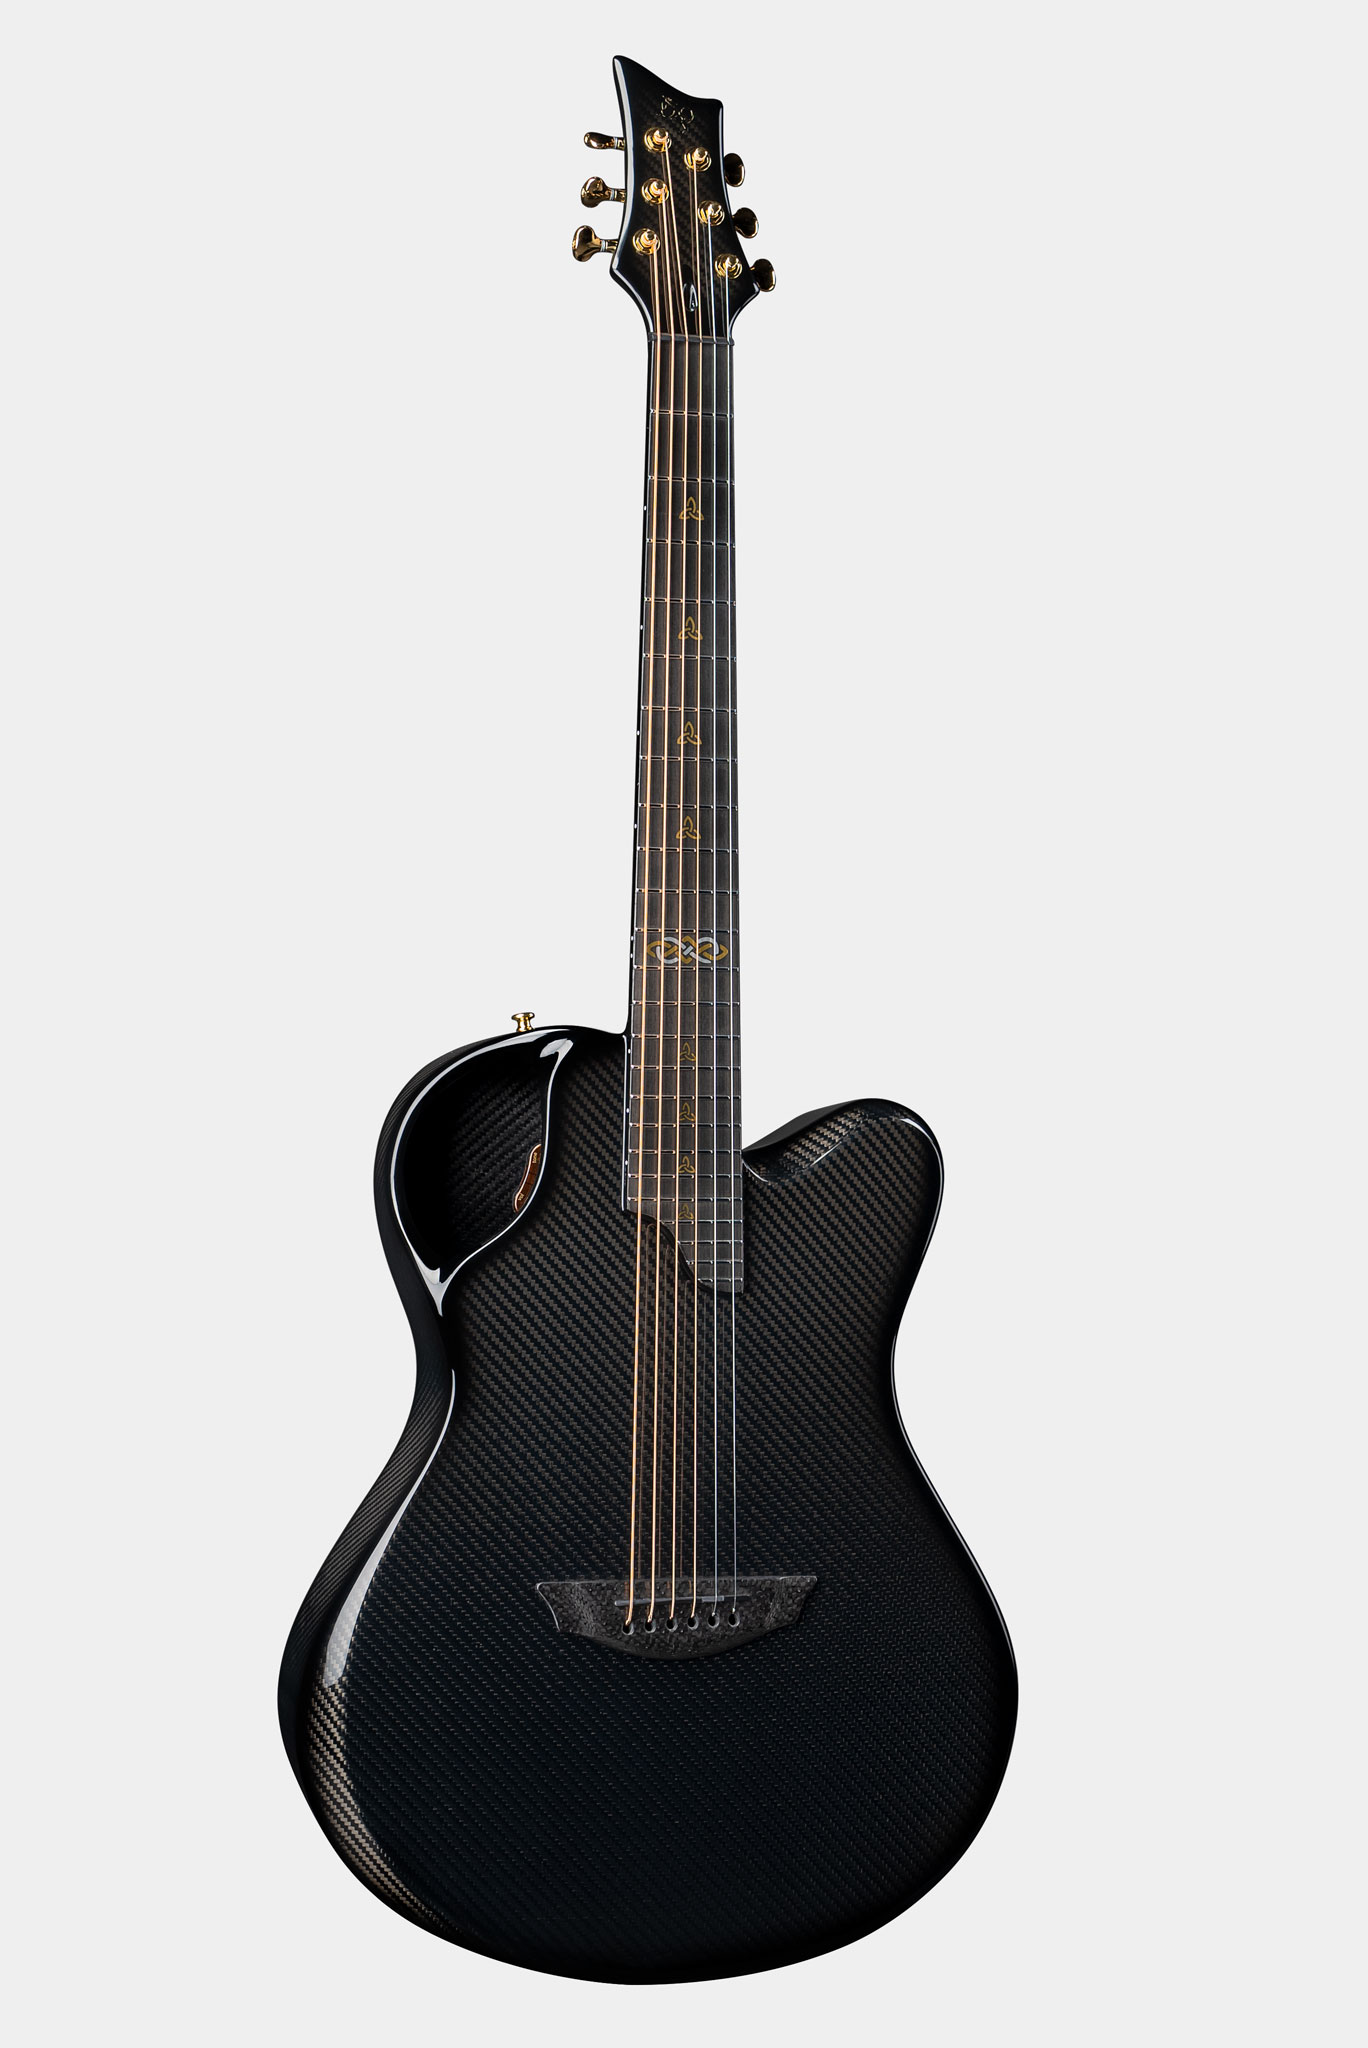 Emerald X20 Carbon Fiber Guitar in Black